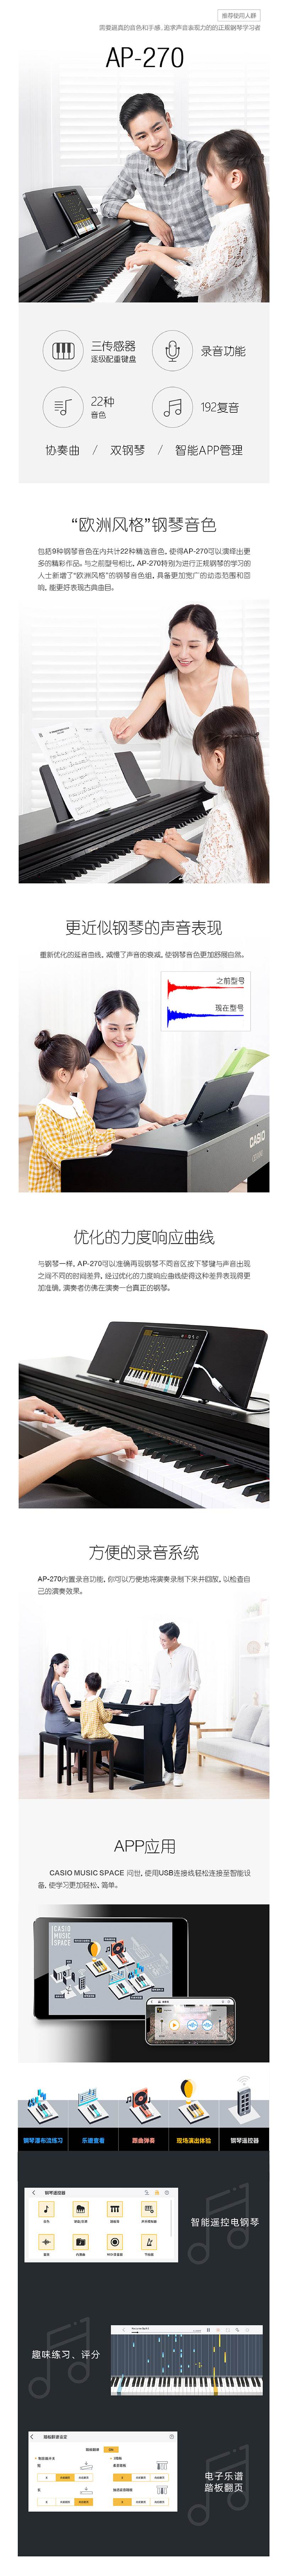 天津买钢琴